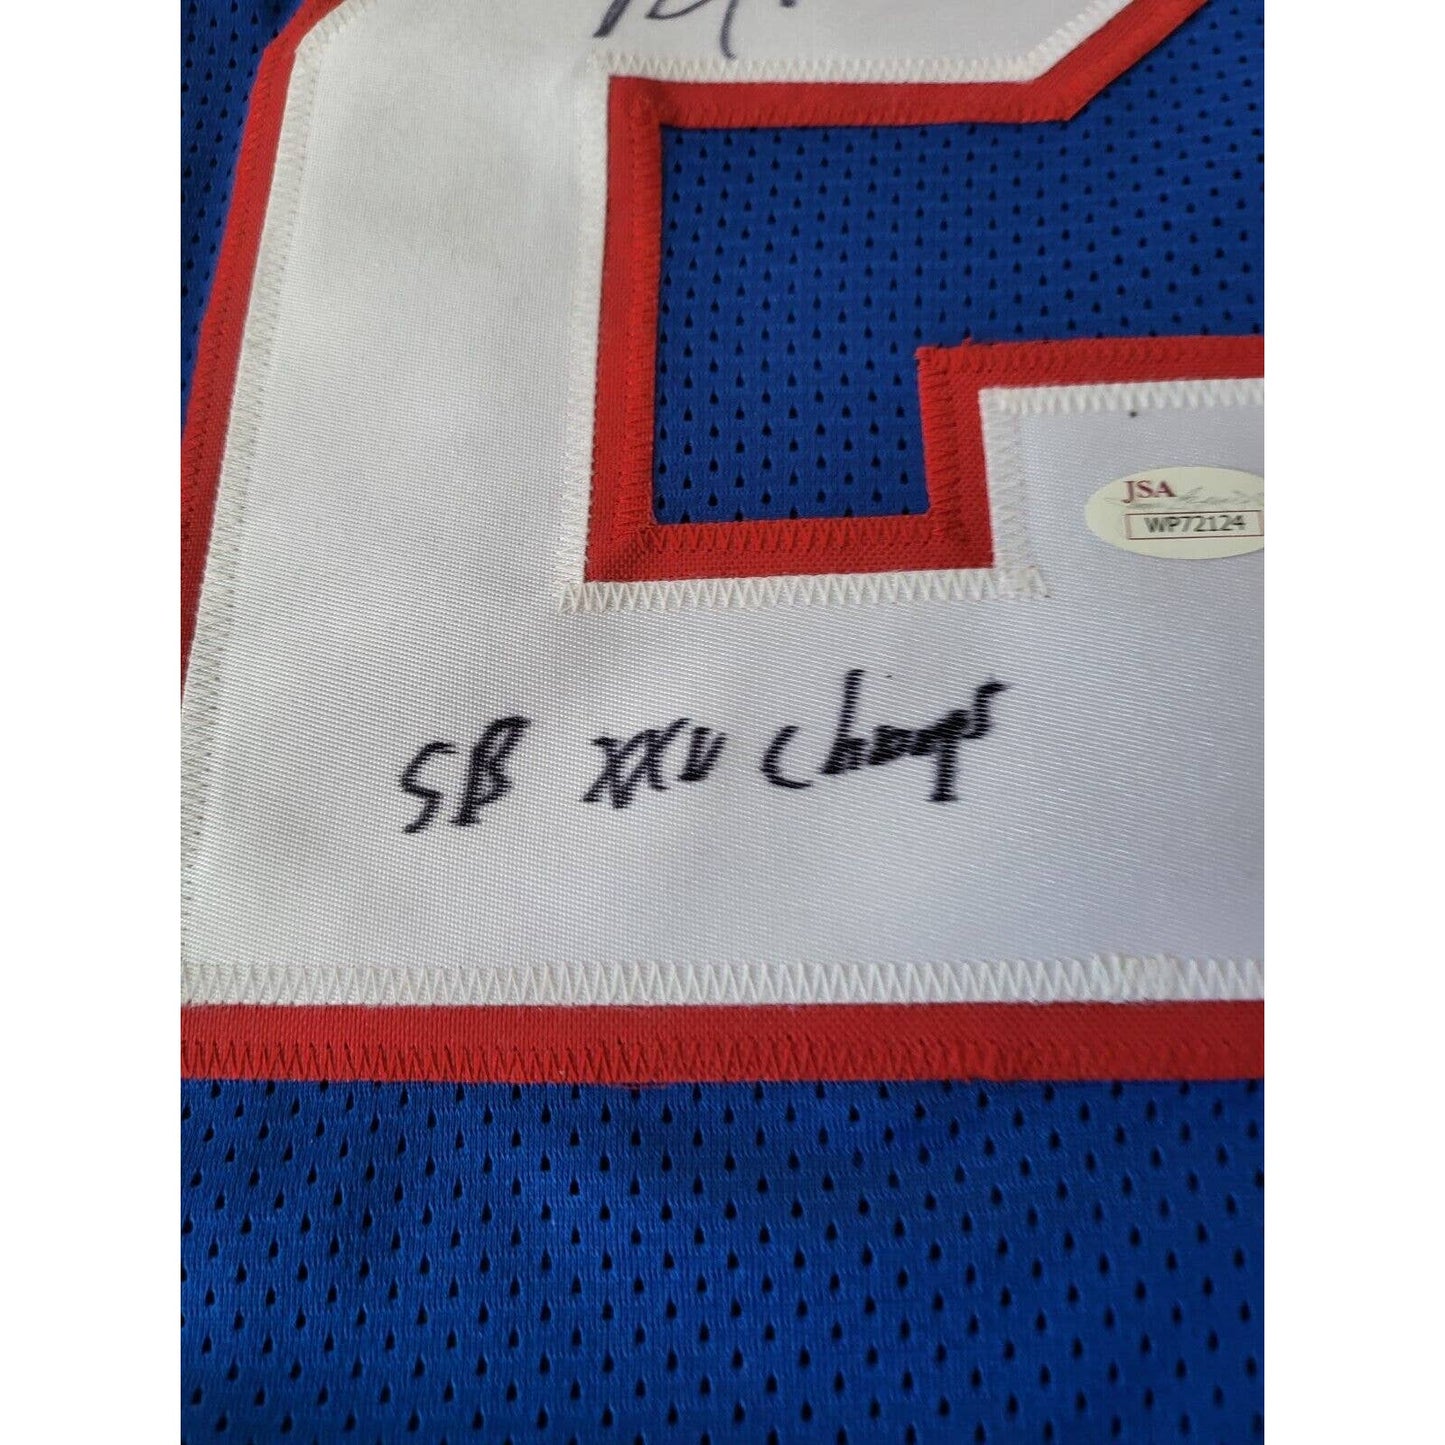 Rodney Hampton Autographed/Signed Jersey JSA COA New York Giants - TreasuresEvolved